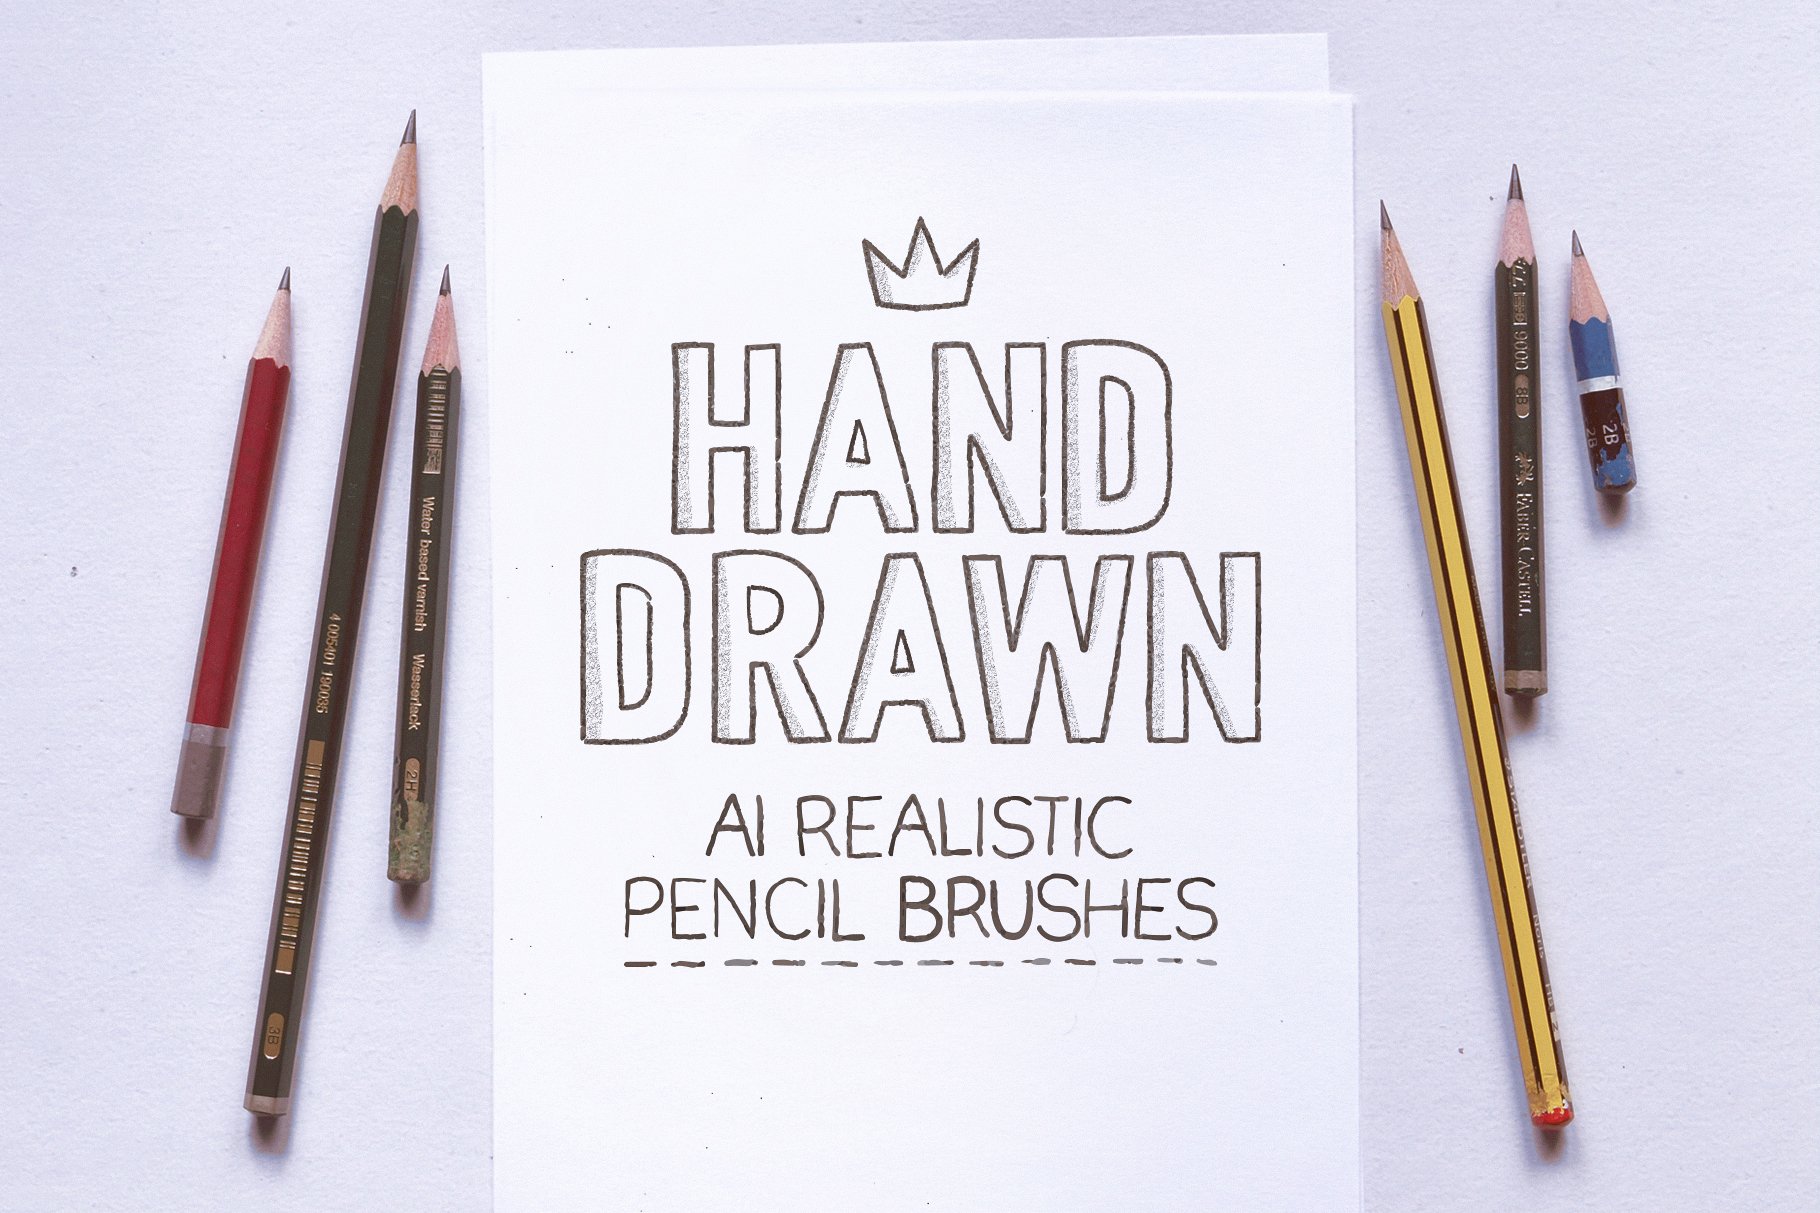 AI realistic pencil brushes cover image.